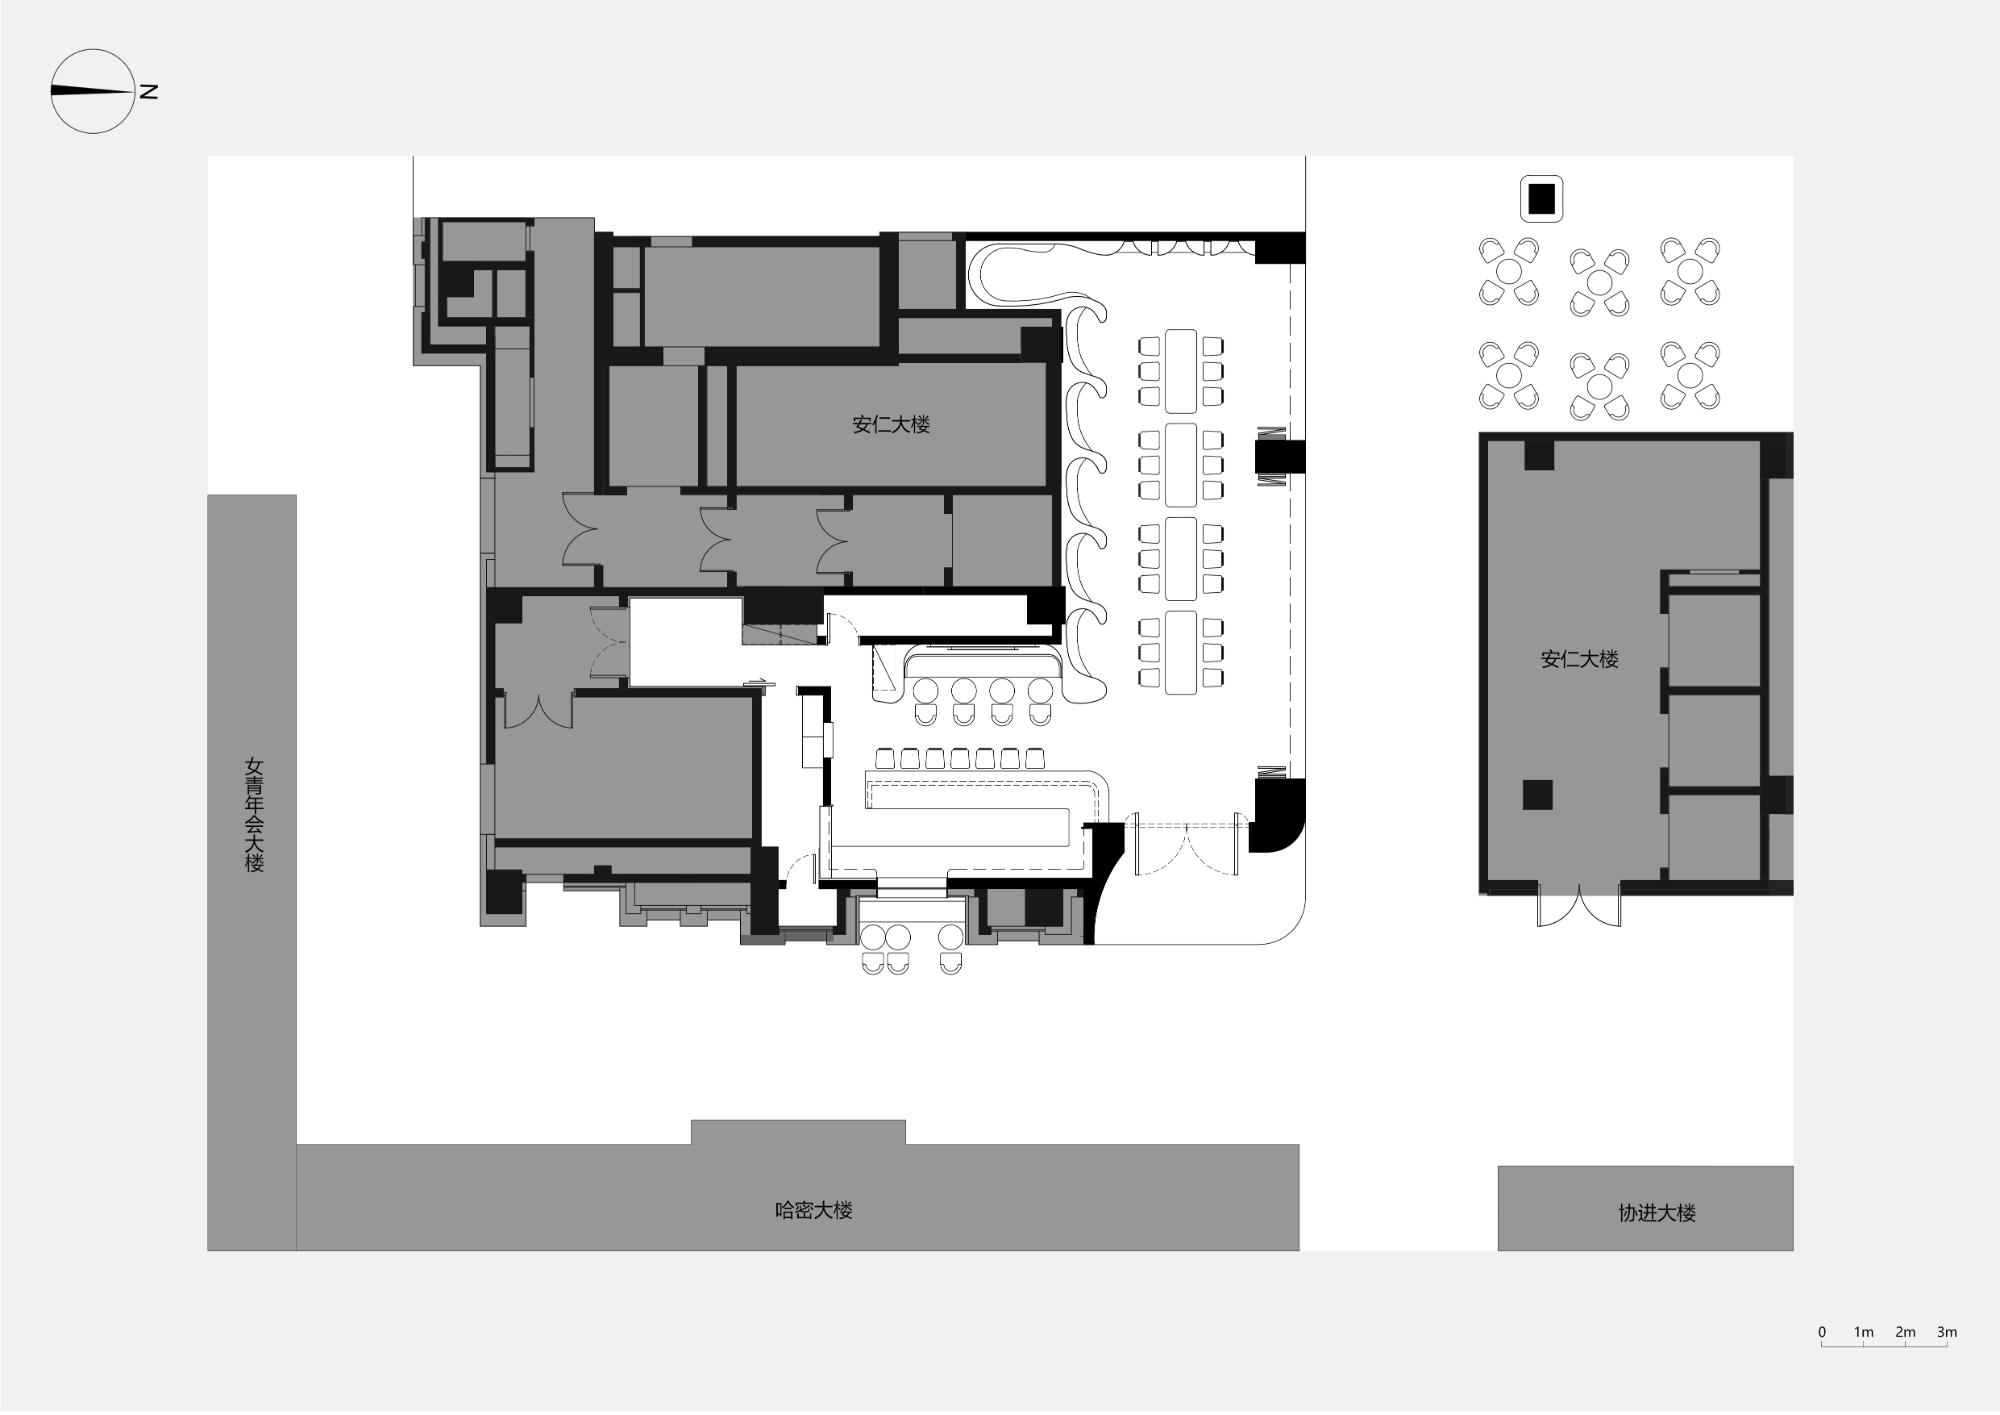 09ground floor plan 首层平面图.jpg